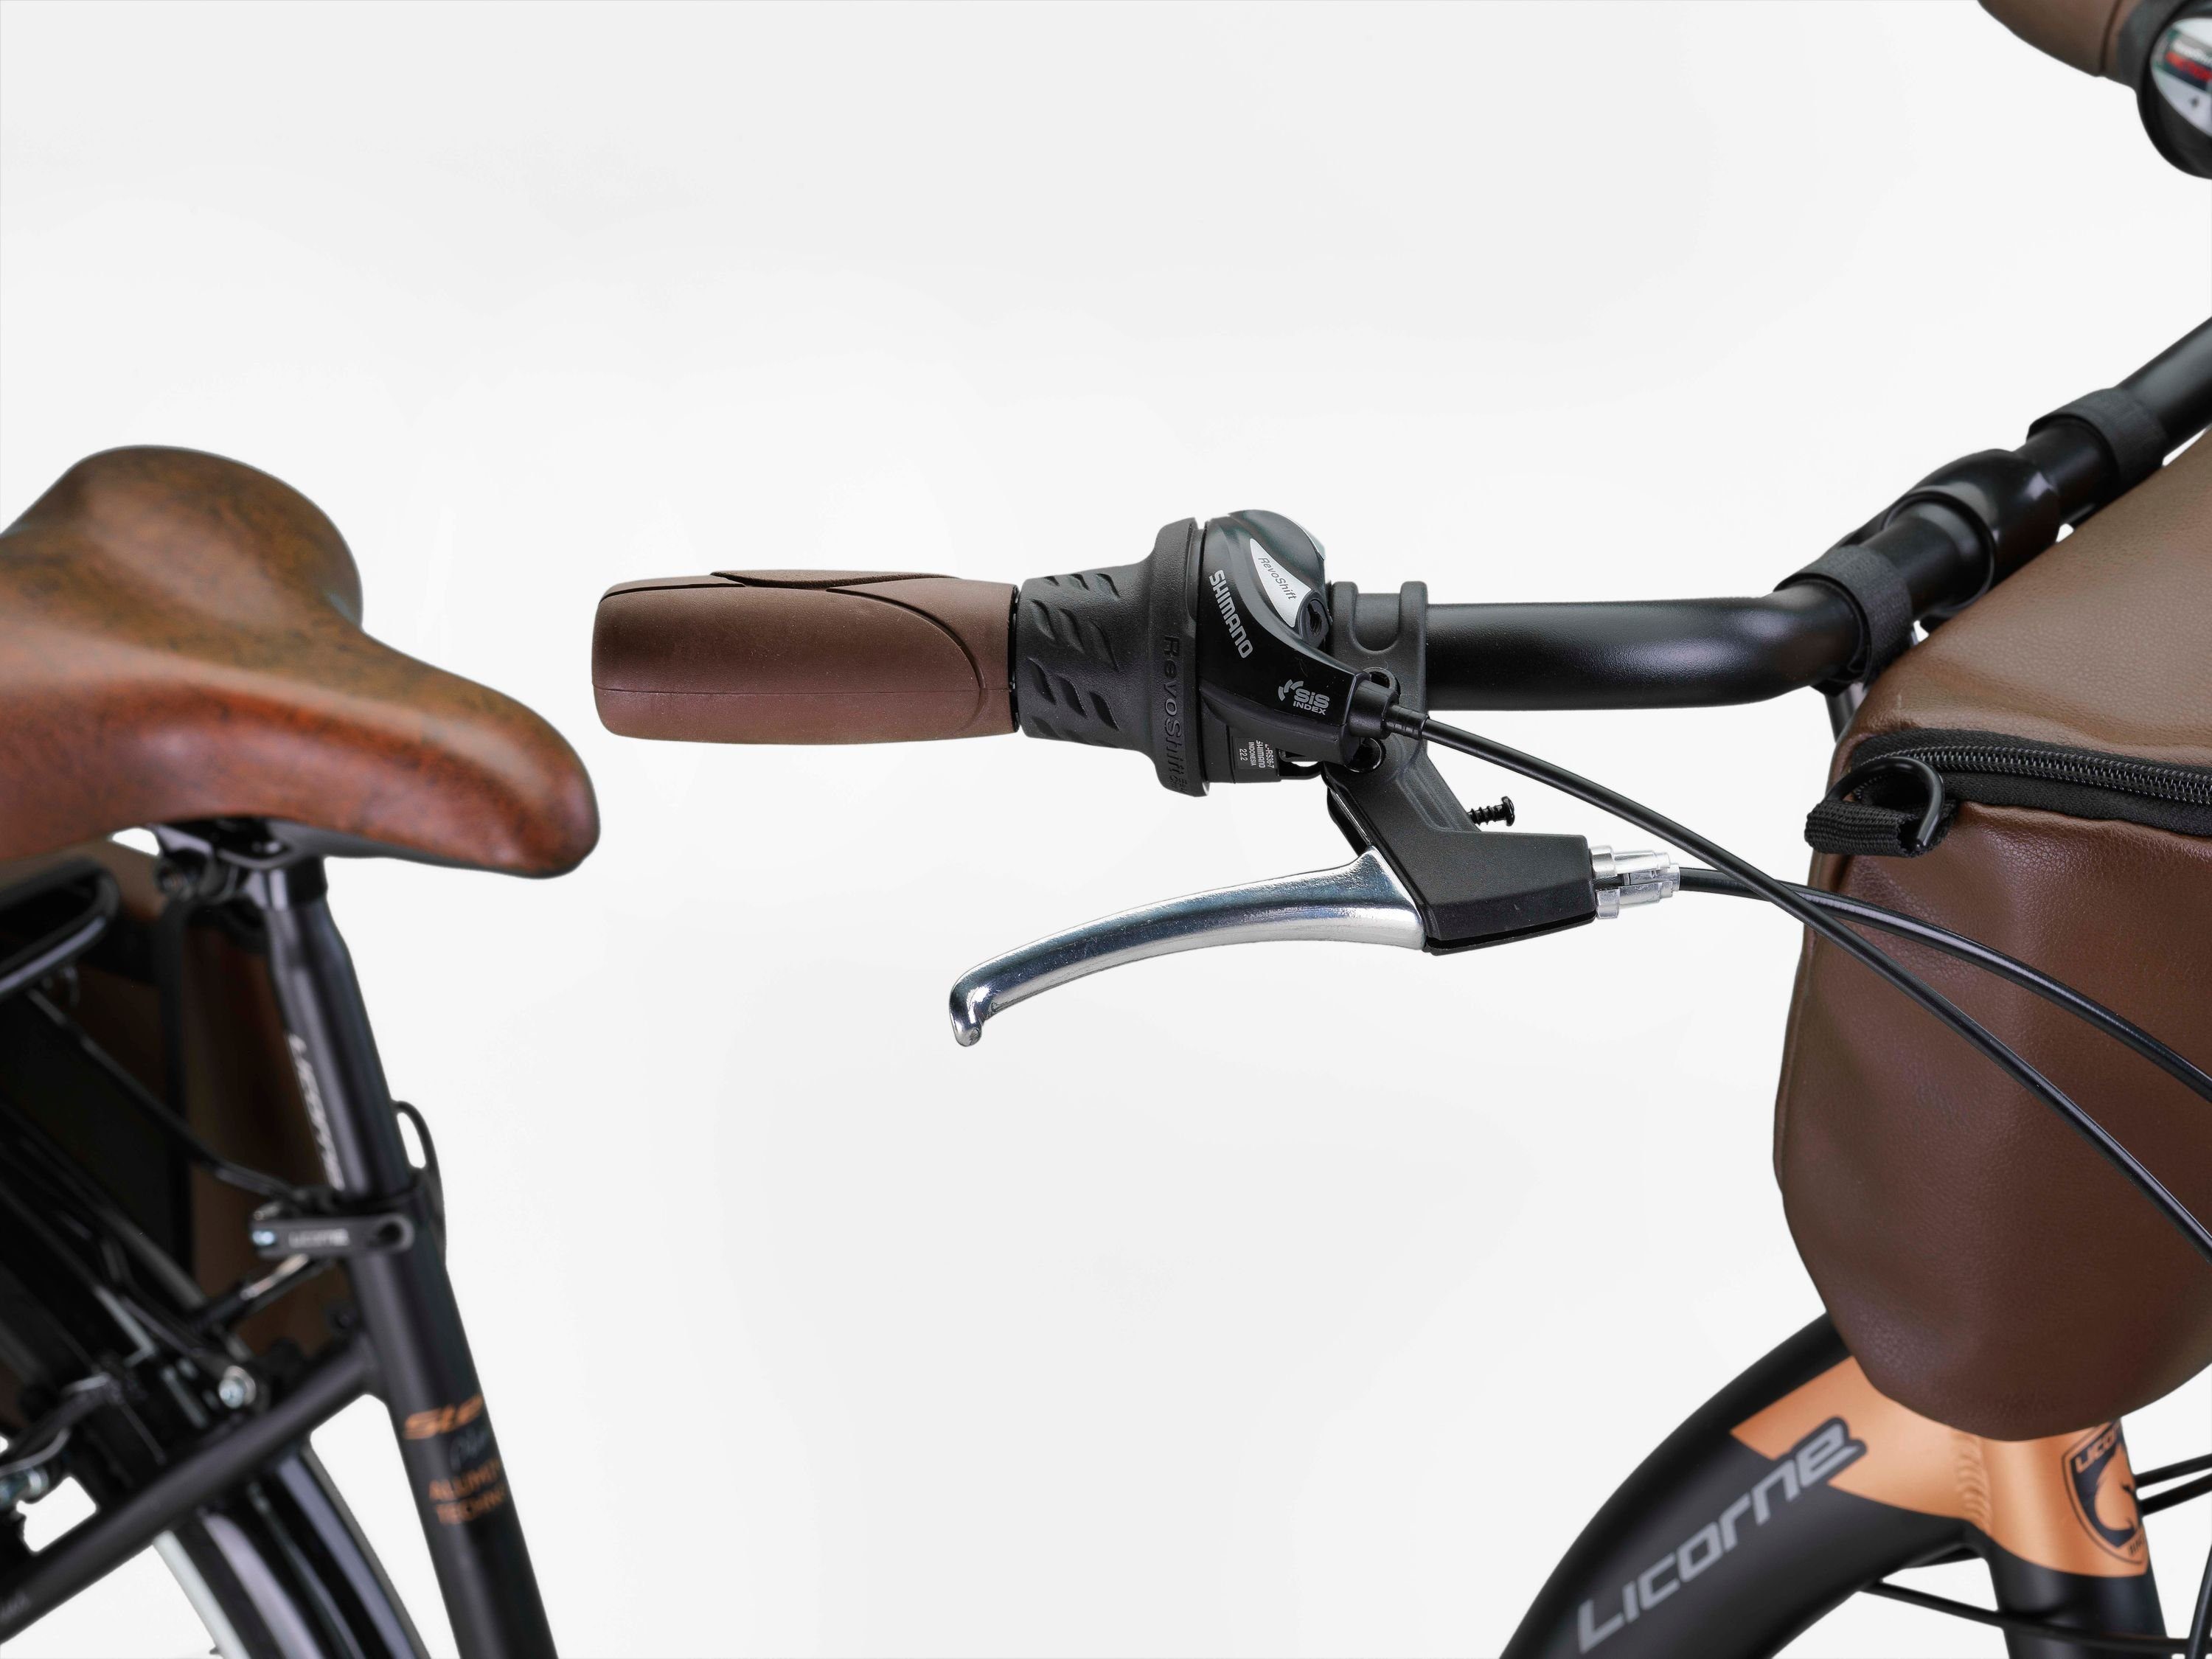 Bike Stella Premium Gang 21 Anthrazit Bike Cityrad Bike Licorne Licorne Aluminium, Plus City